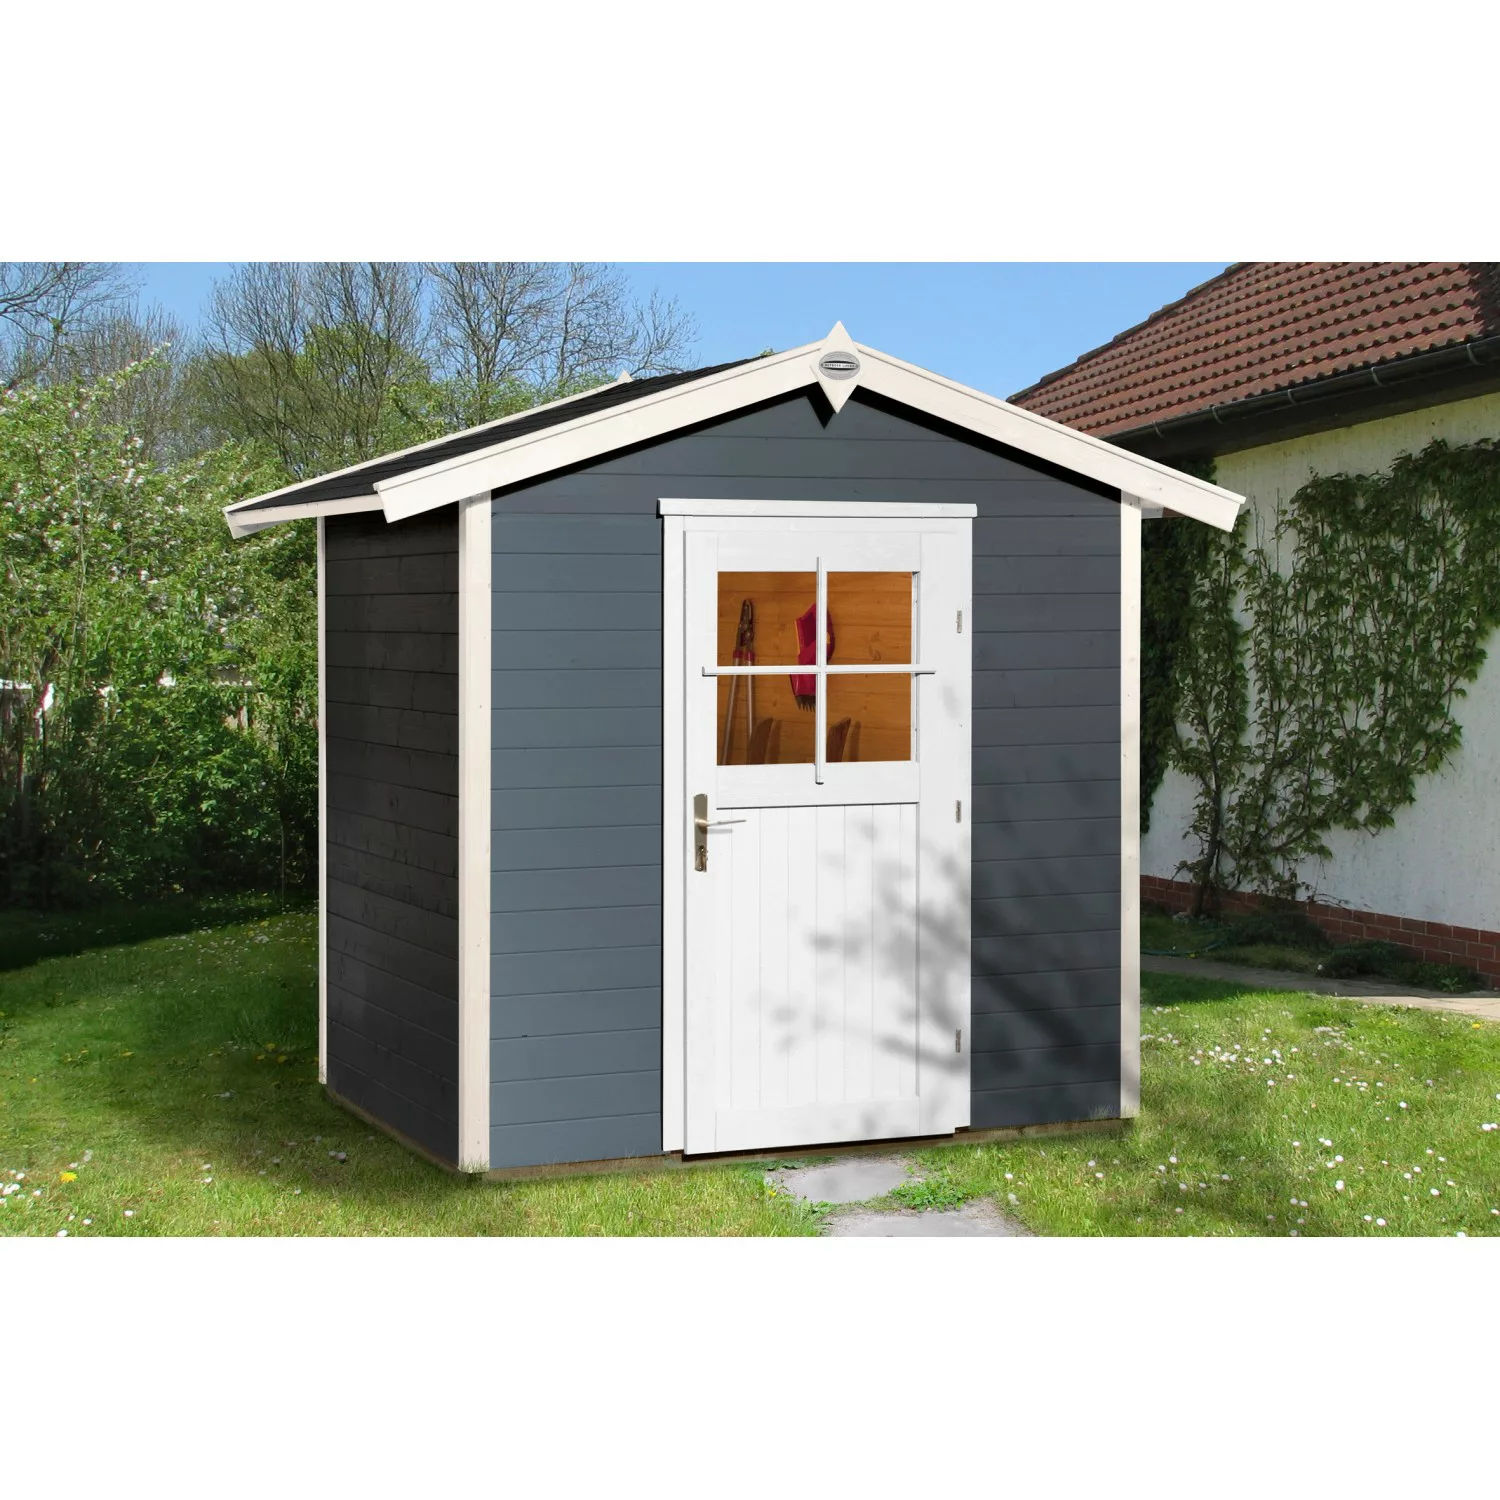 OBI Outdoor Living Holz-Gartenhaus Monza Satteldach Lasiert 205 cm x 174 cm günstig online kaufen